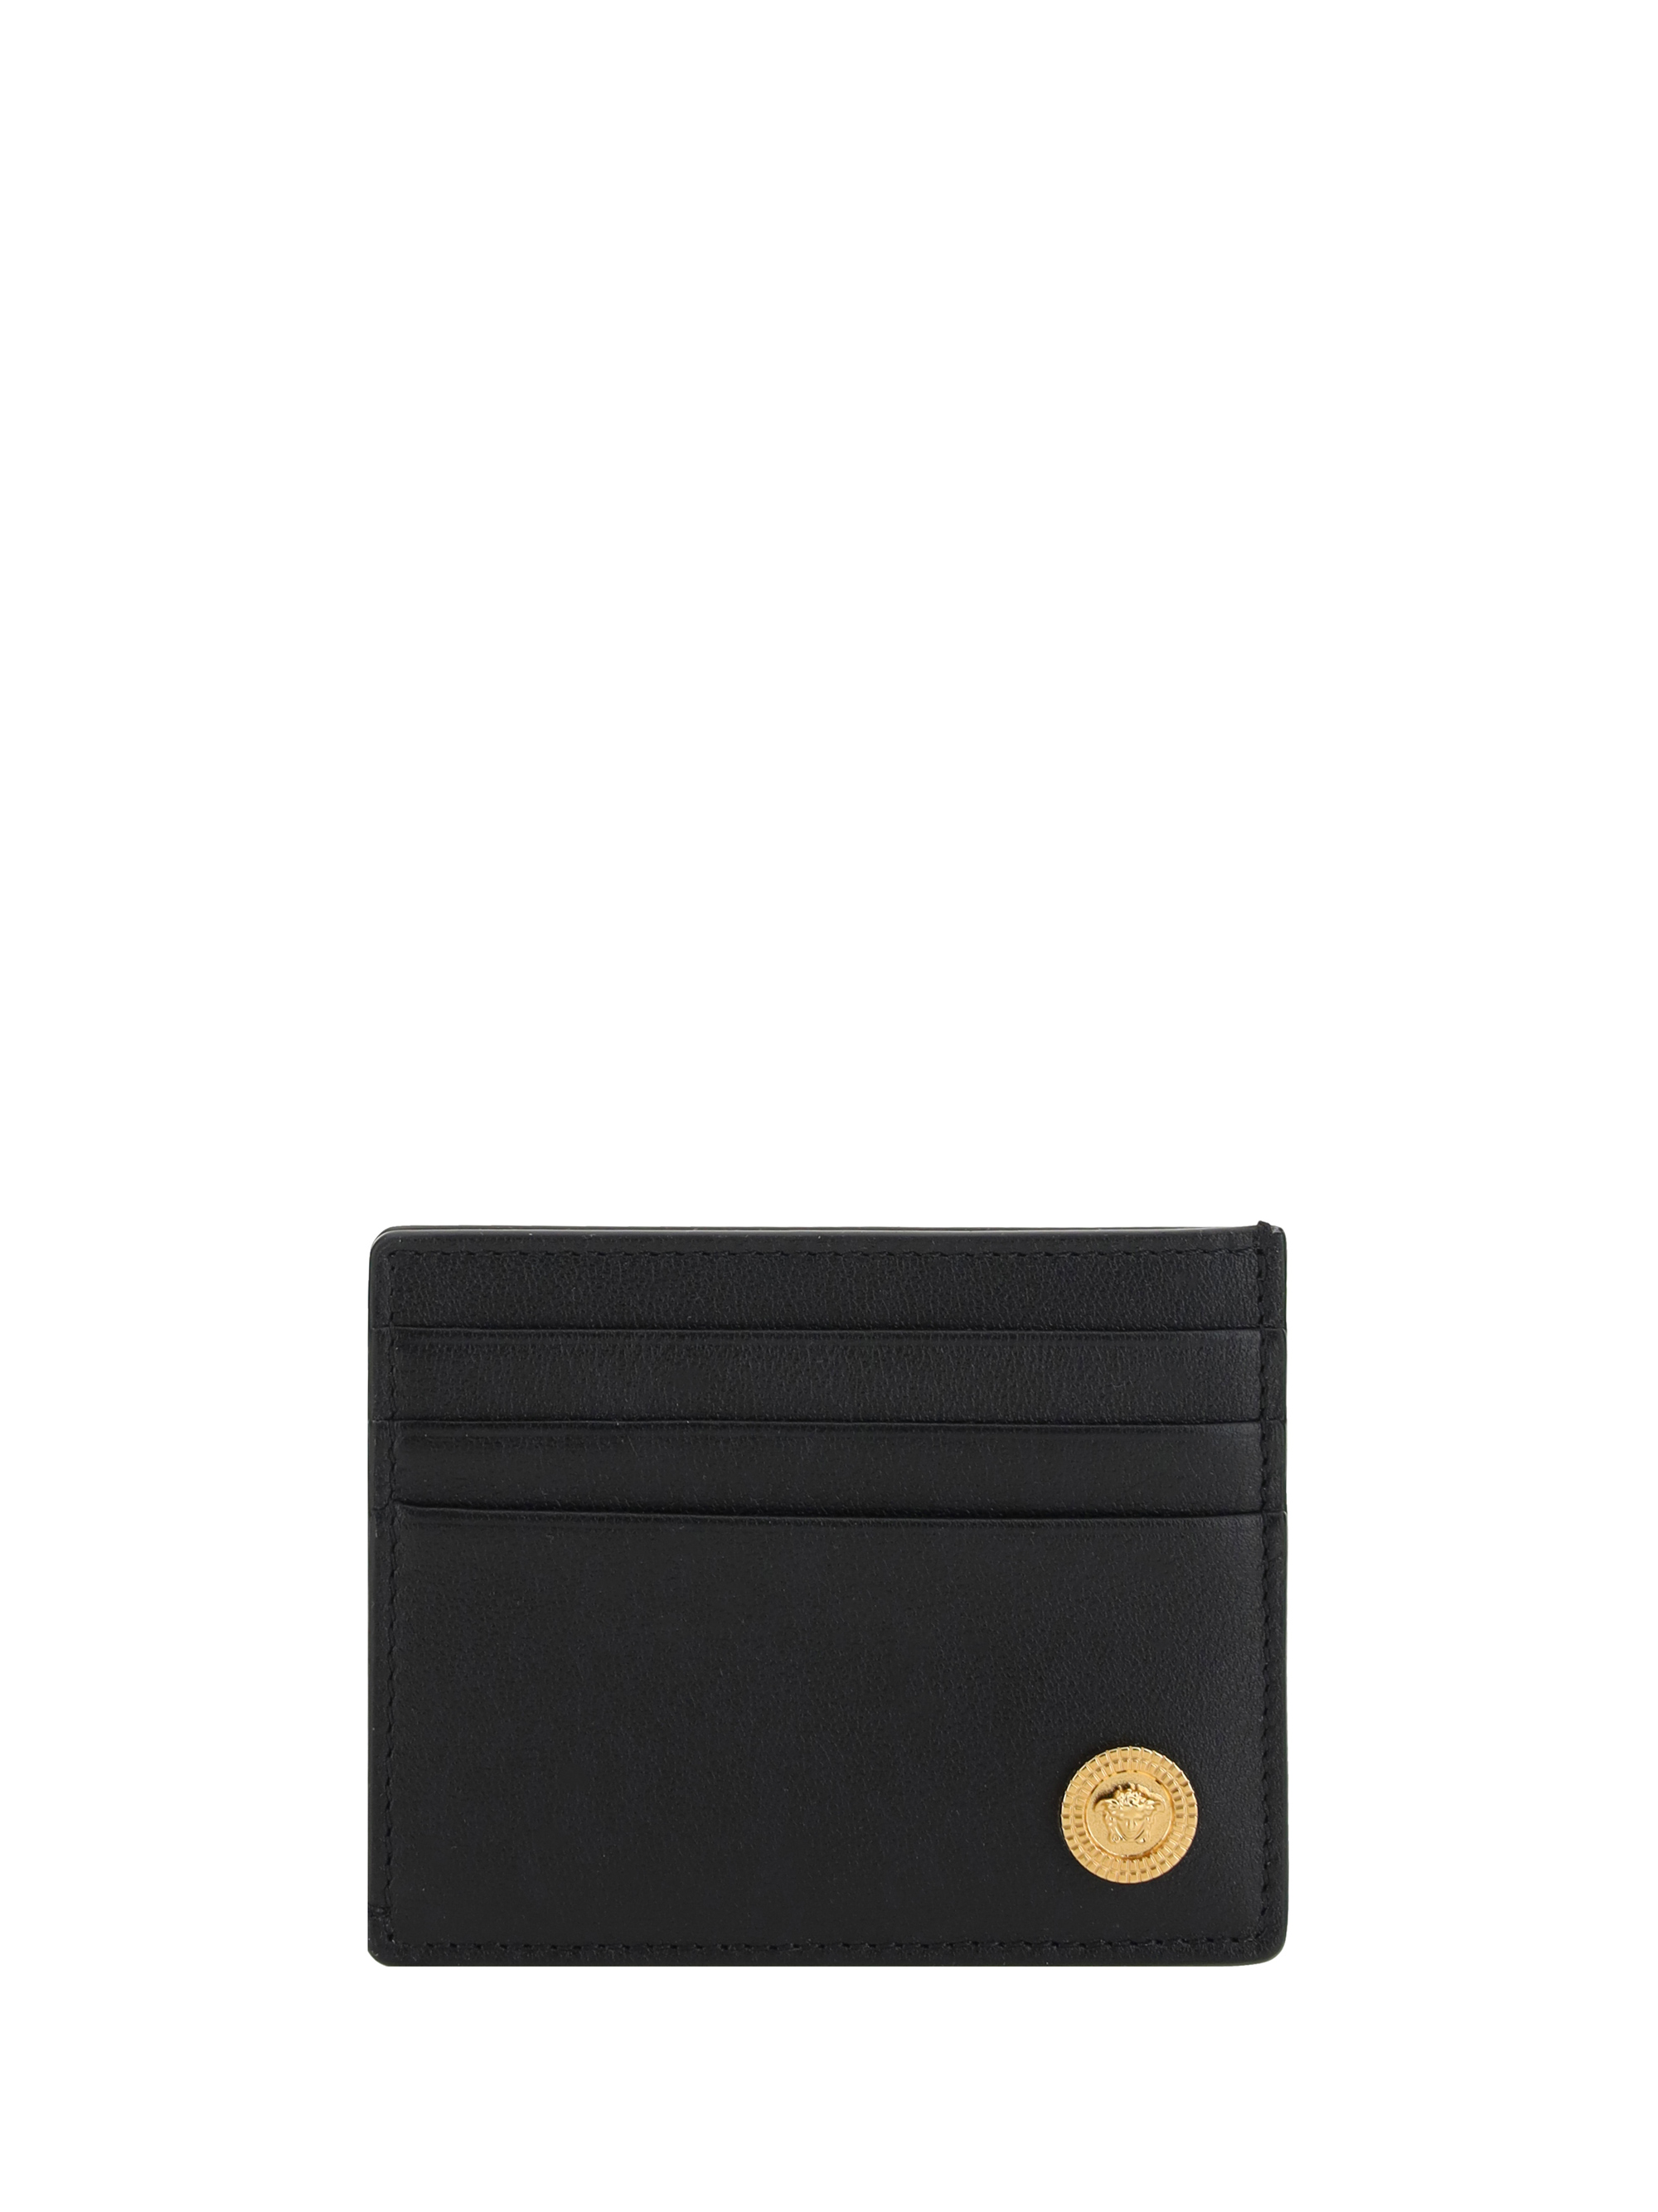 Versace Card Holder In Black/ Gold